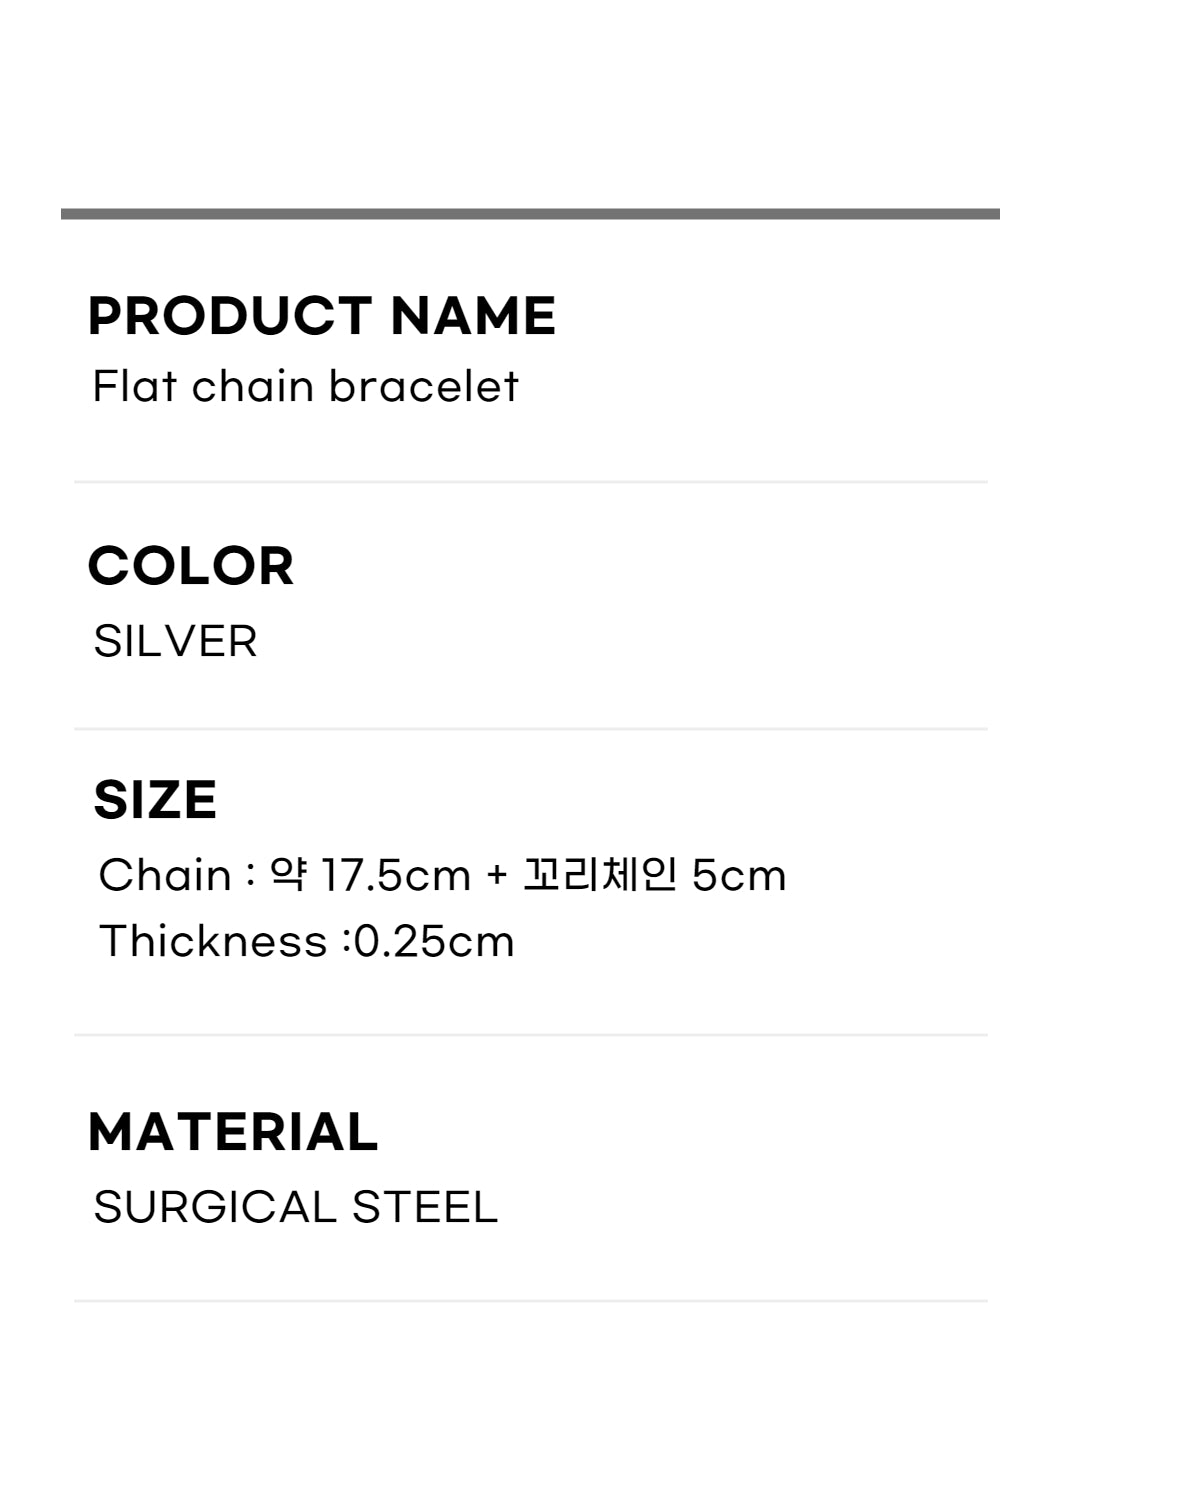 flat chain bracelet stainless steel